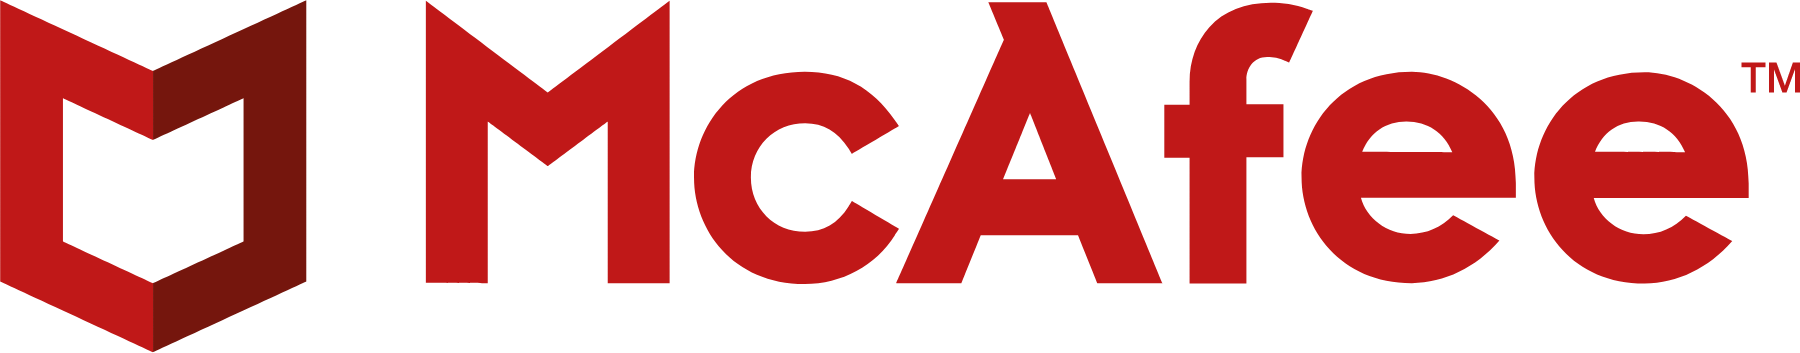 McAfee logo large (transparent PNG)